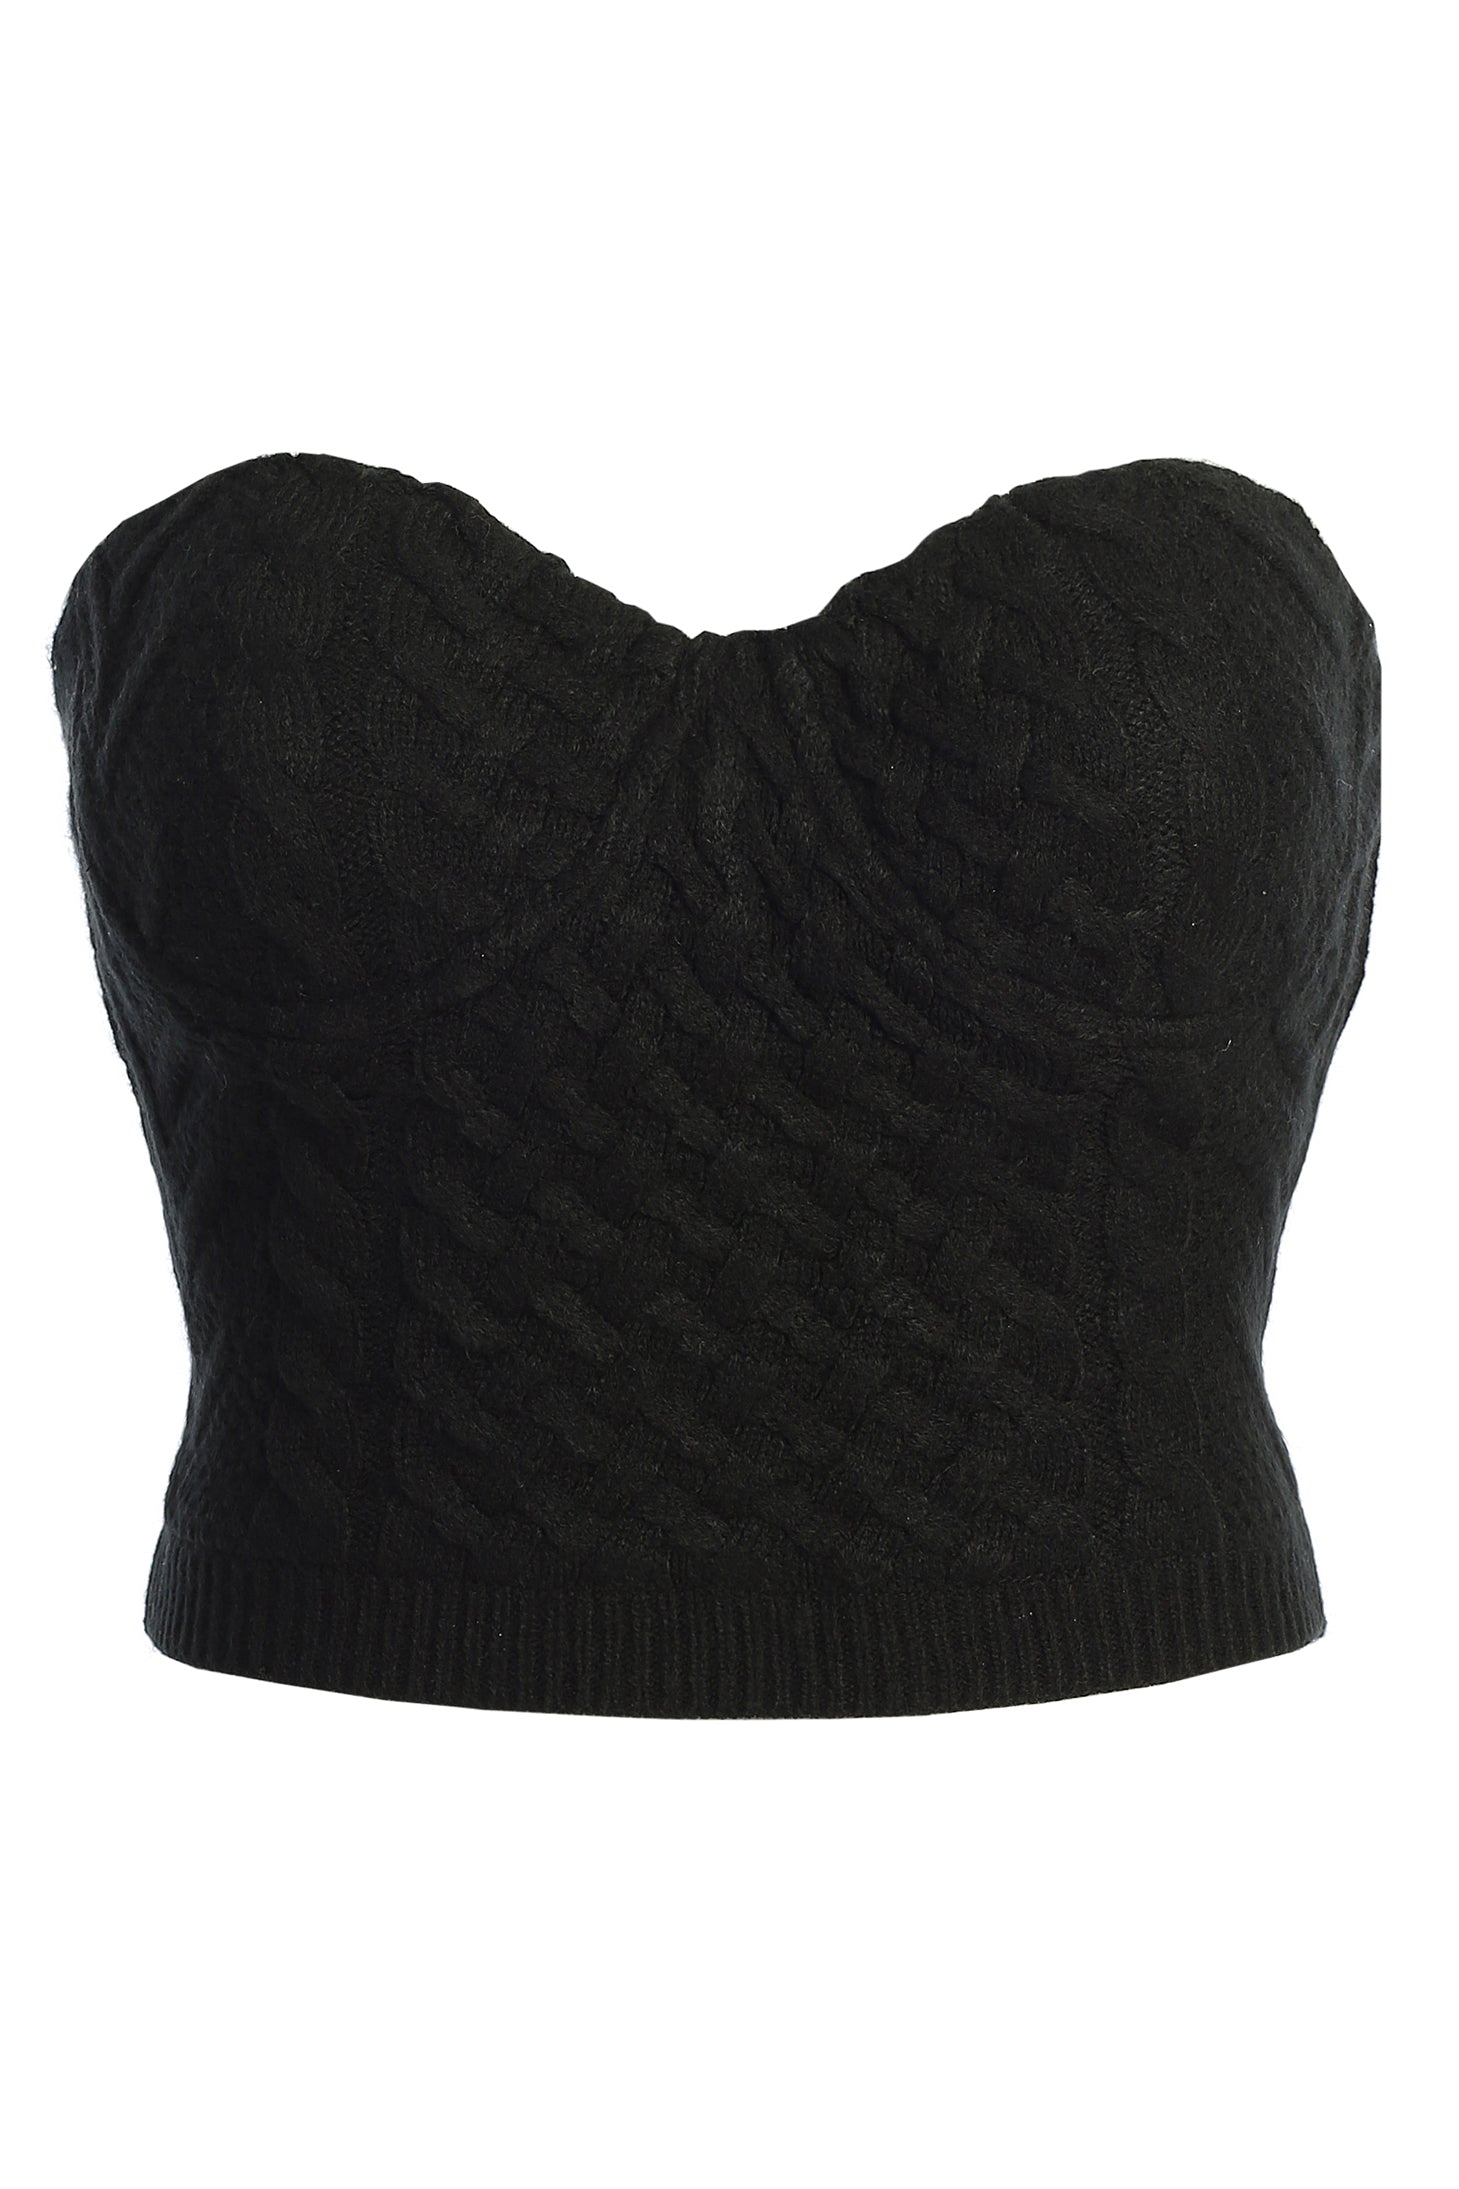 Black Davina Sweater Knit Bustier Top